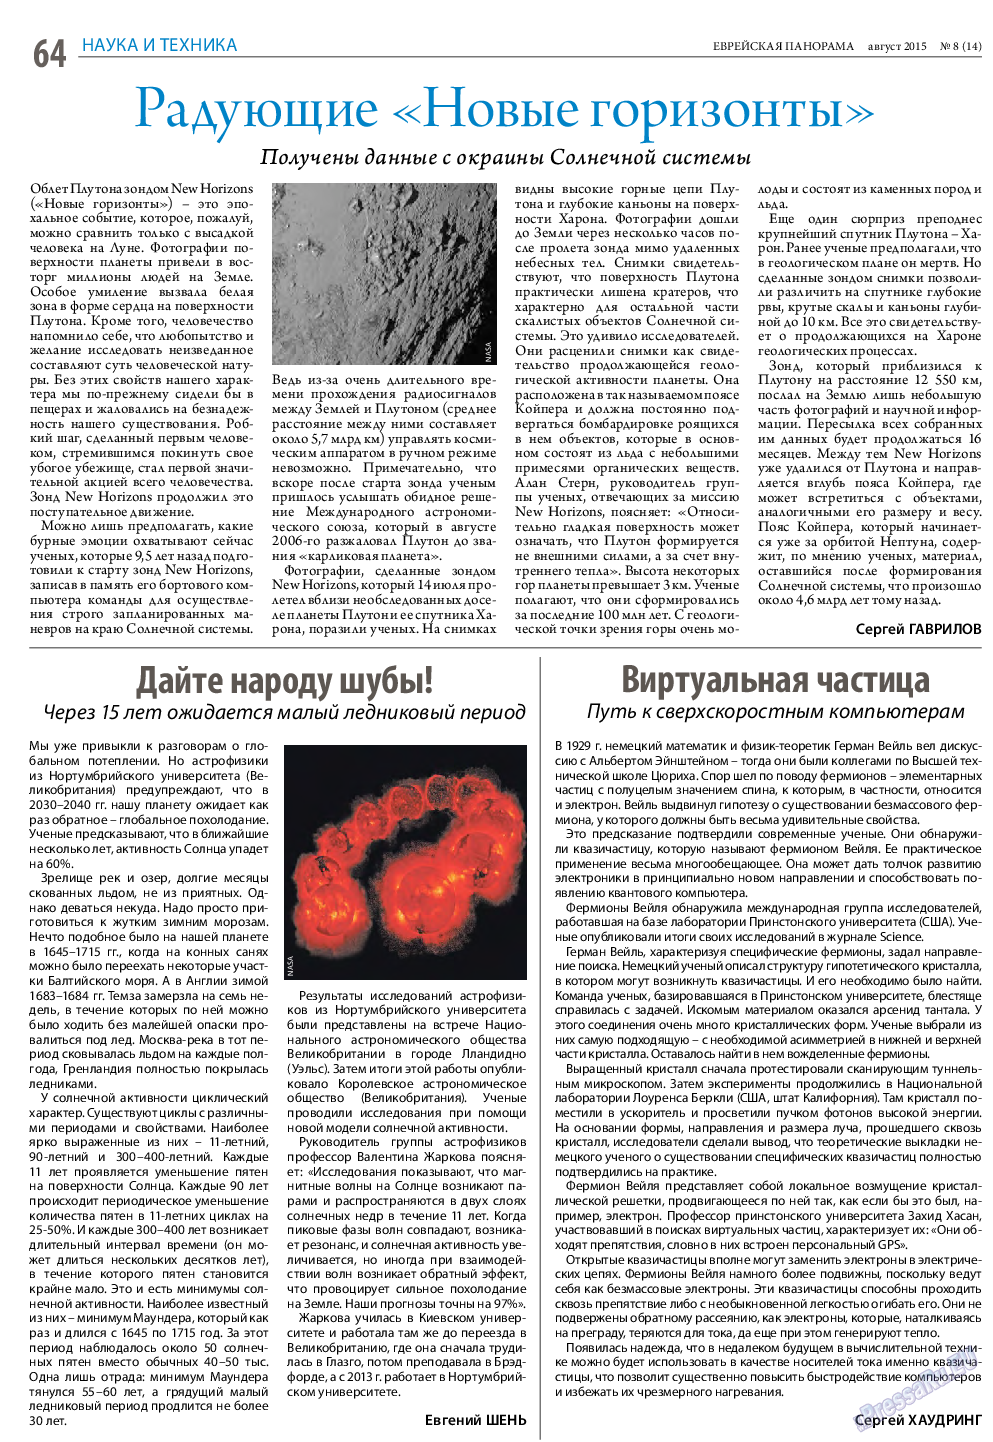 Еврейская панорама, газета. 2015 №8 стр.64